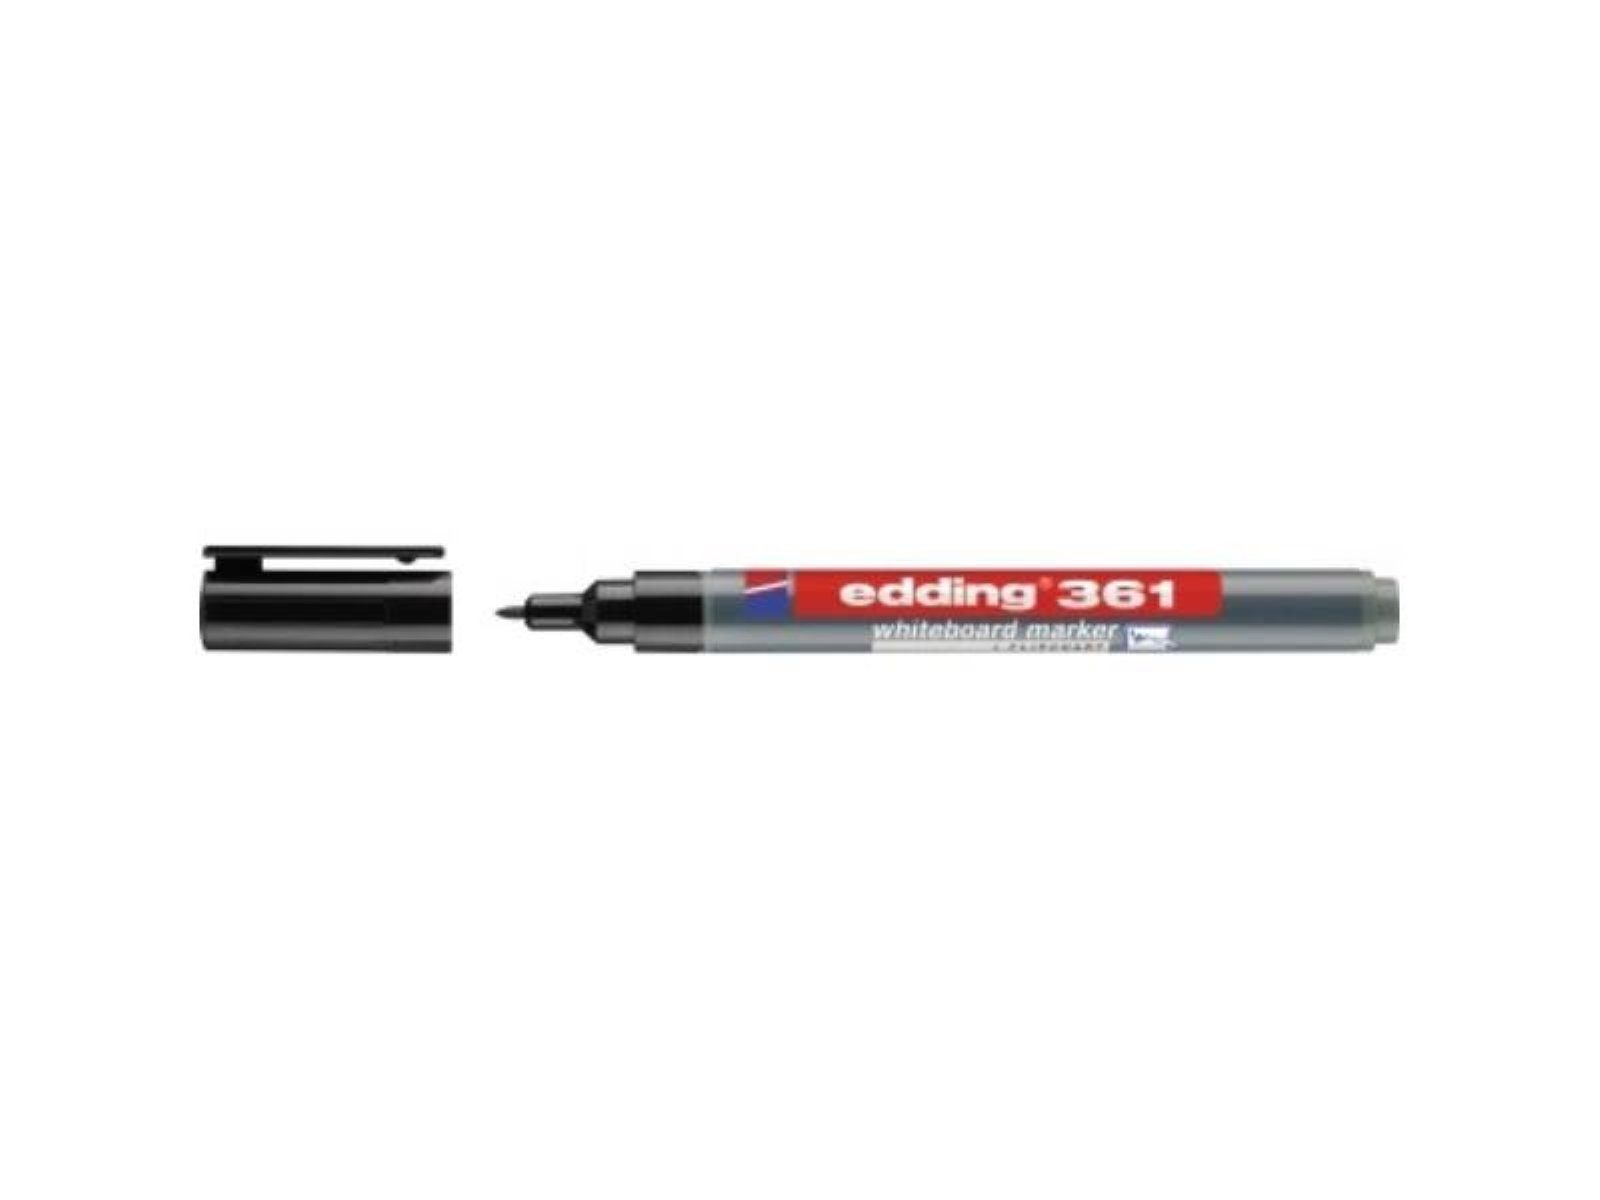 4-361001 EDDING edding Whiteboardm Marker 1mm 361 schwarz edding Whiteboardmarker